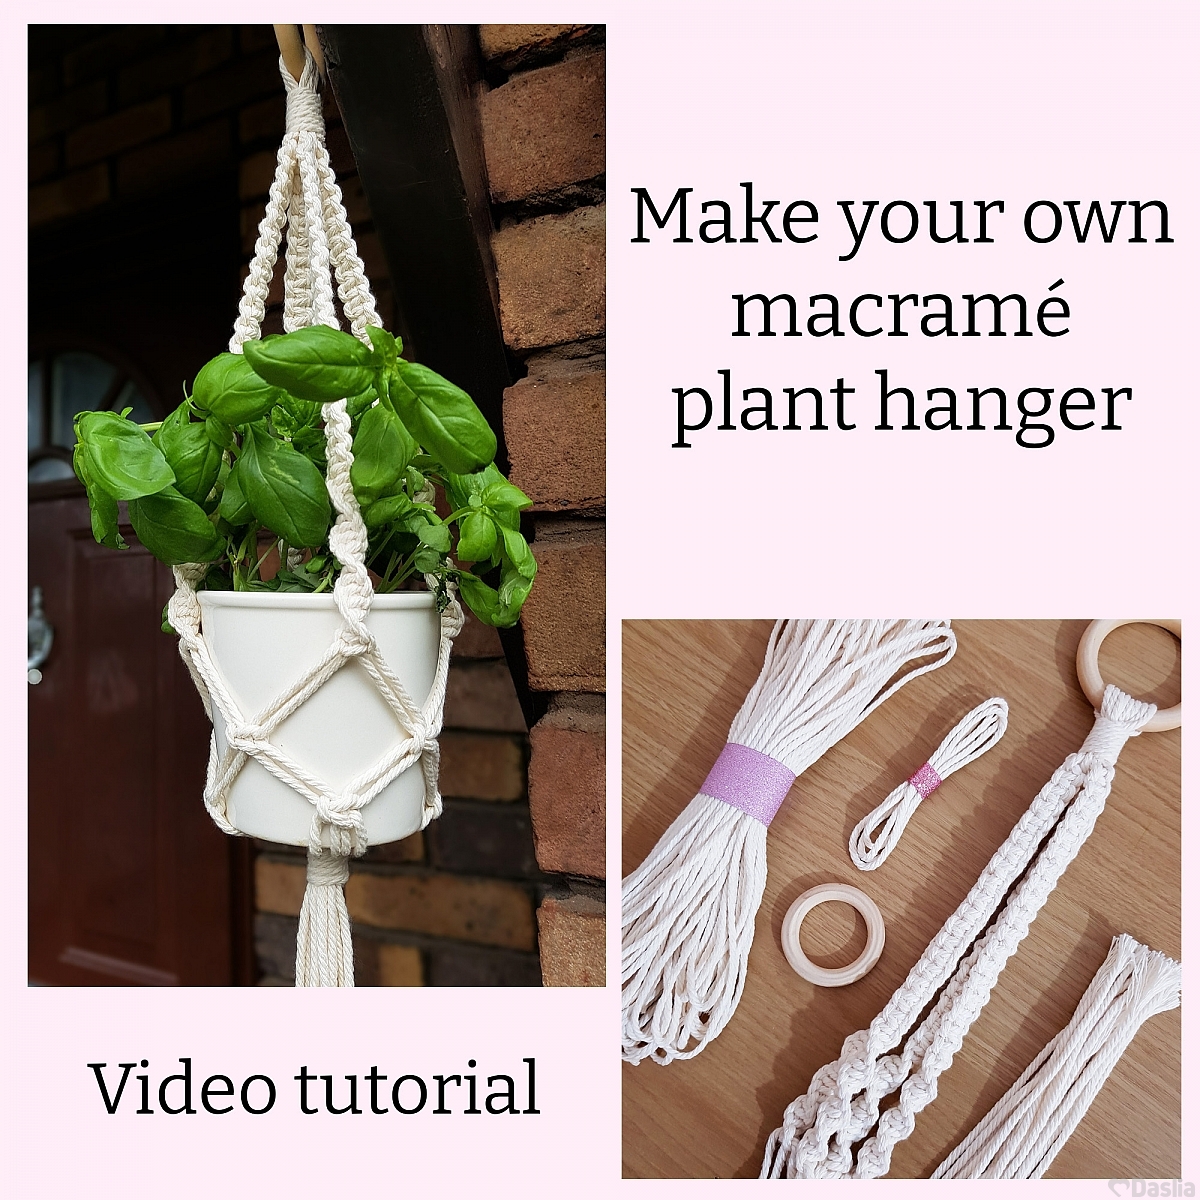 DIY Macrame Plant Hanger Kit for Beginners Includes Video Tutorial